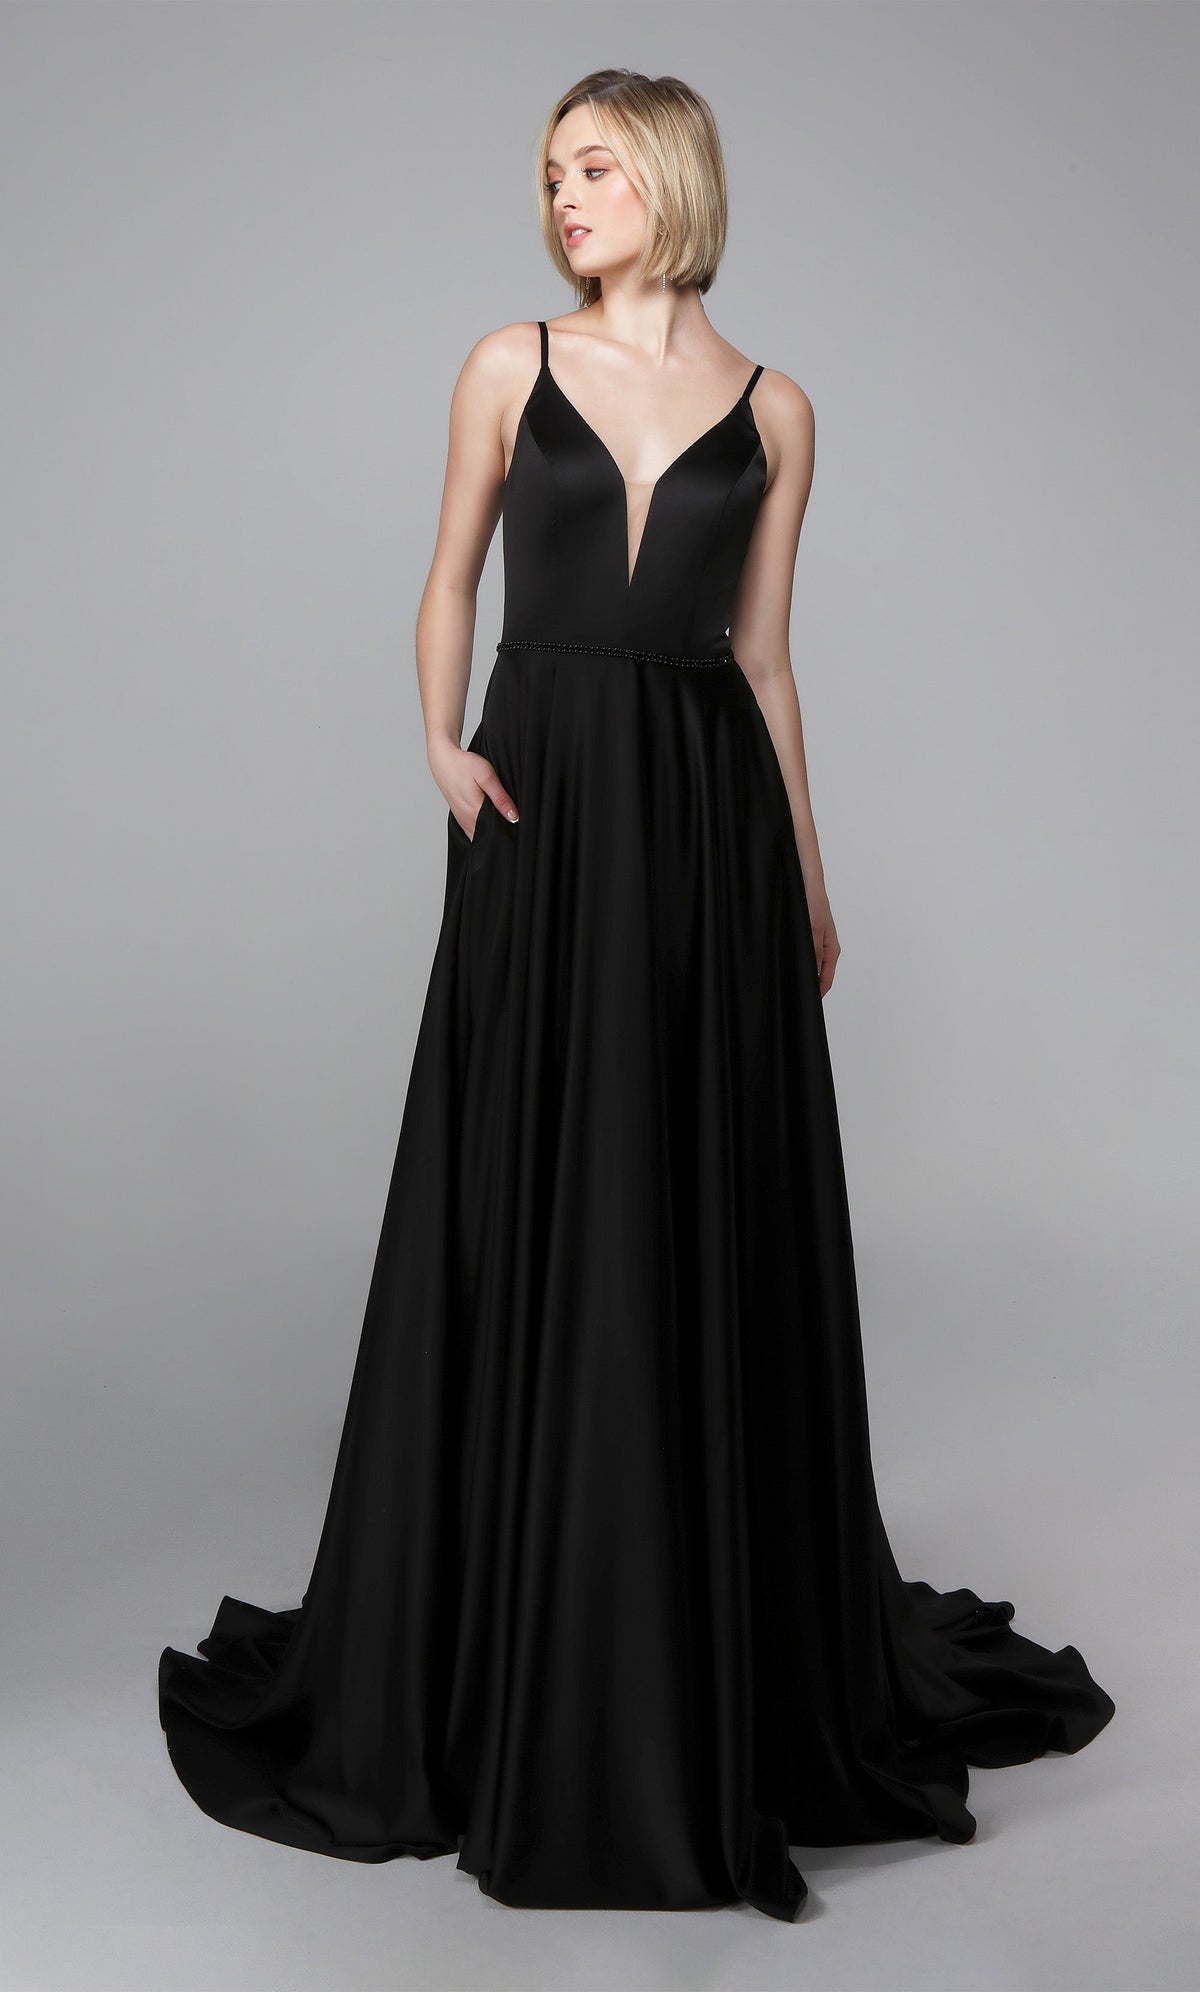 Formal Dress: 7024. Long Bridal Gown, Plunging Neckline, Flowy Alyce Paris